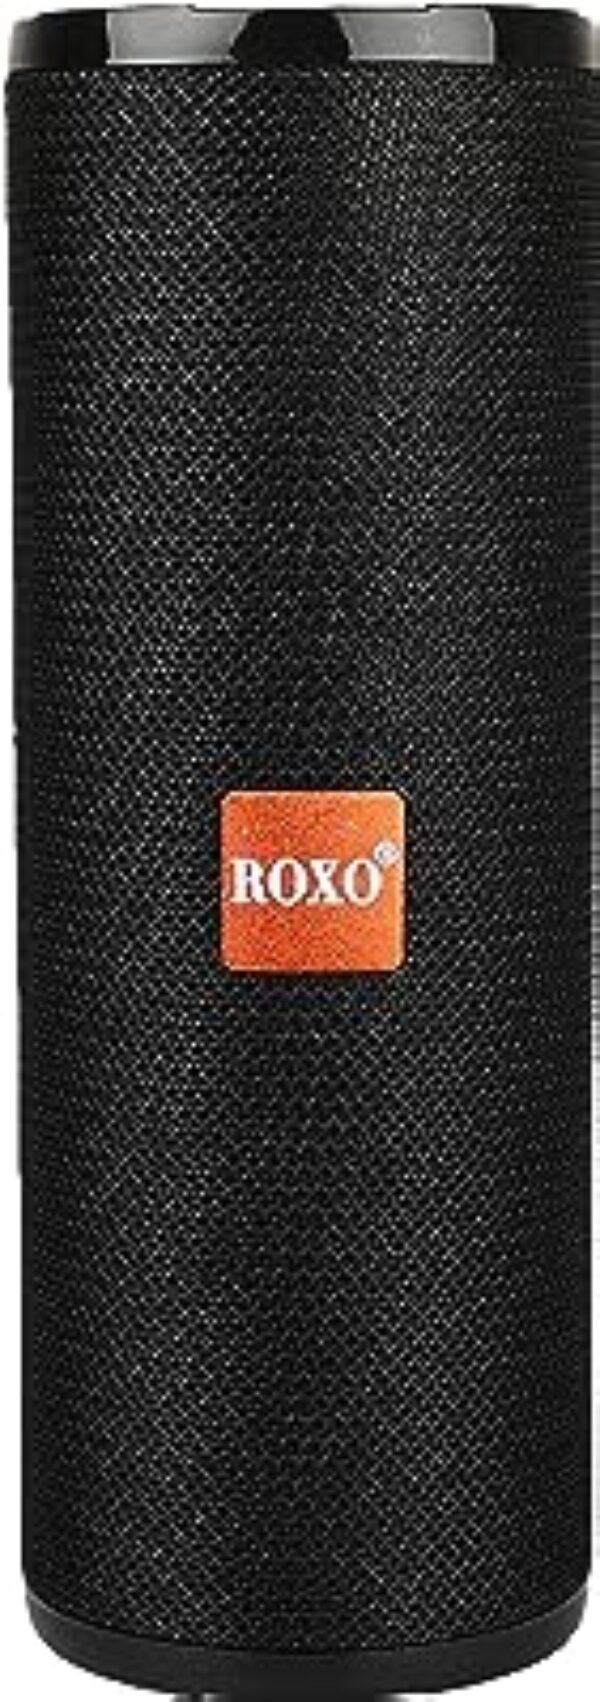 ROXO TG 149 Wireless Bluetooth Speaker (Black)